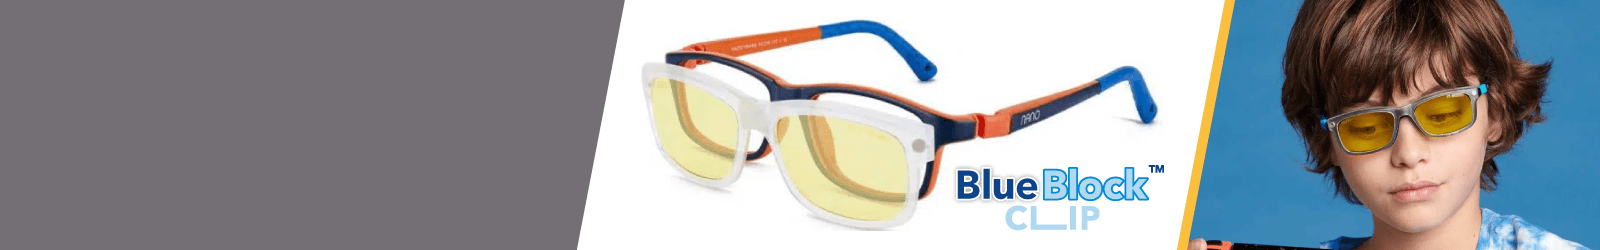 Nano Blue Block Clip Eyewear for Kids   for Neutrals